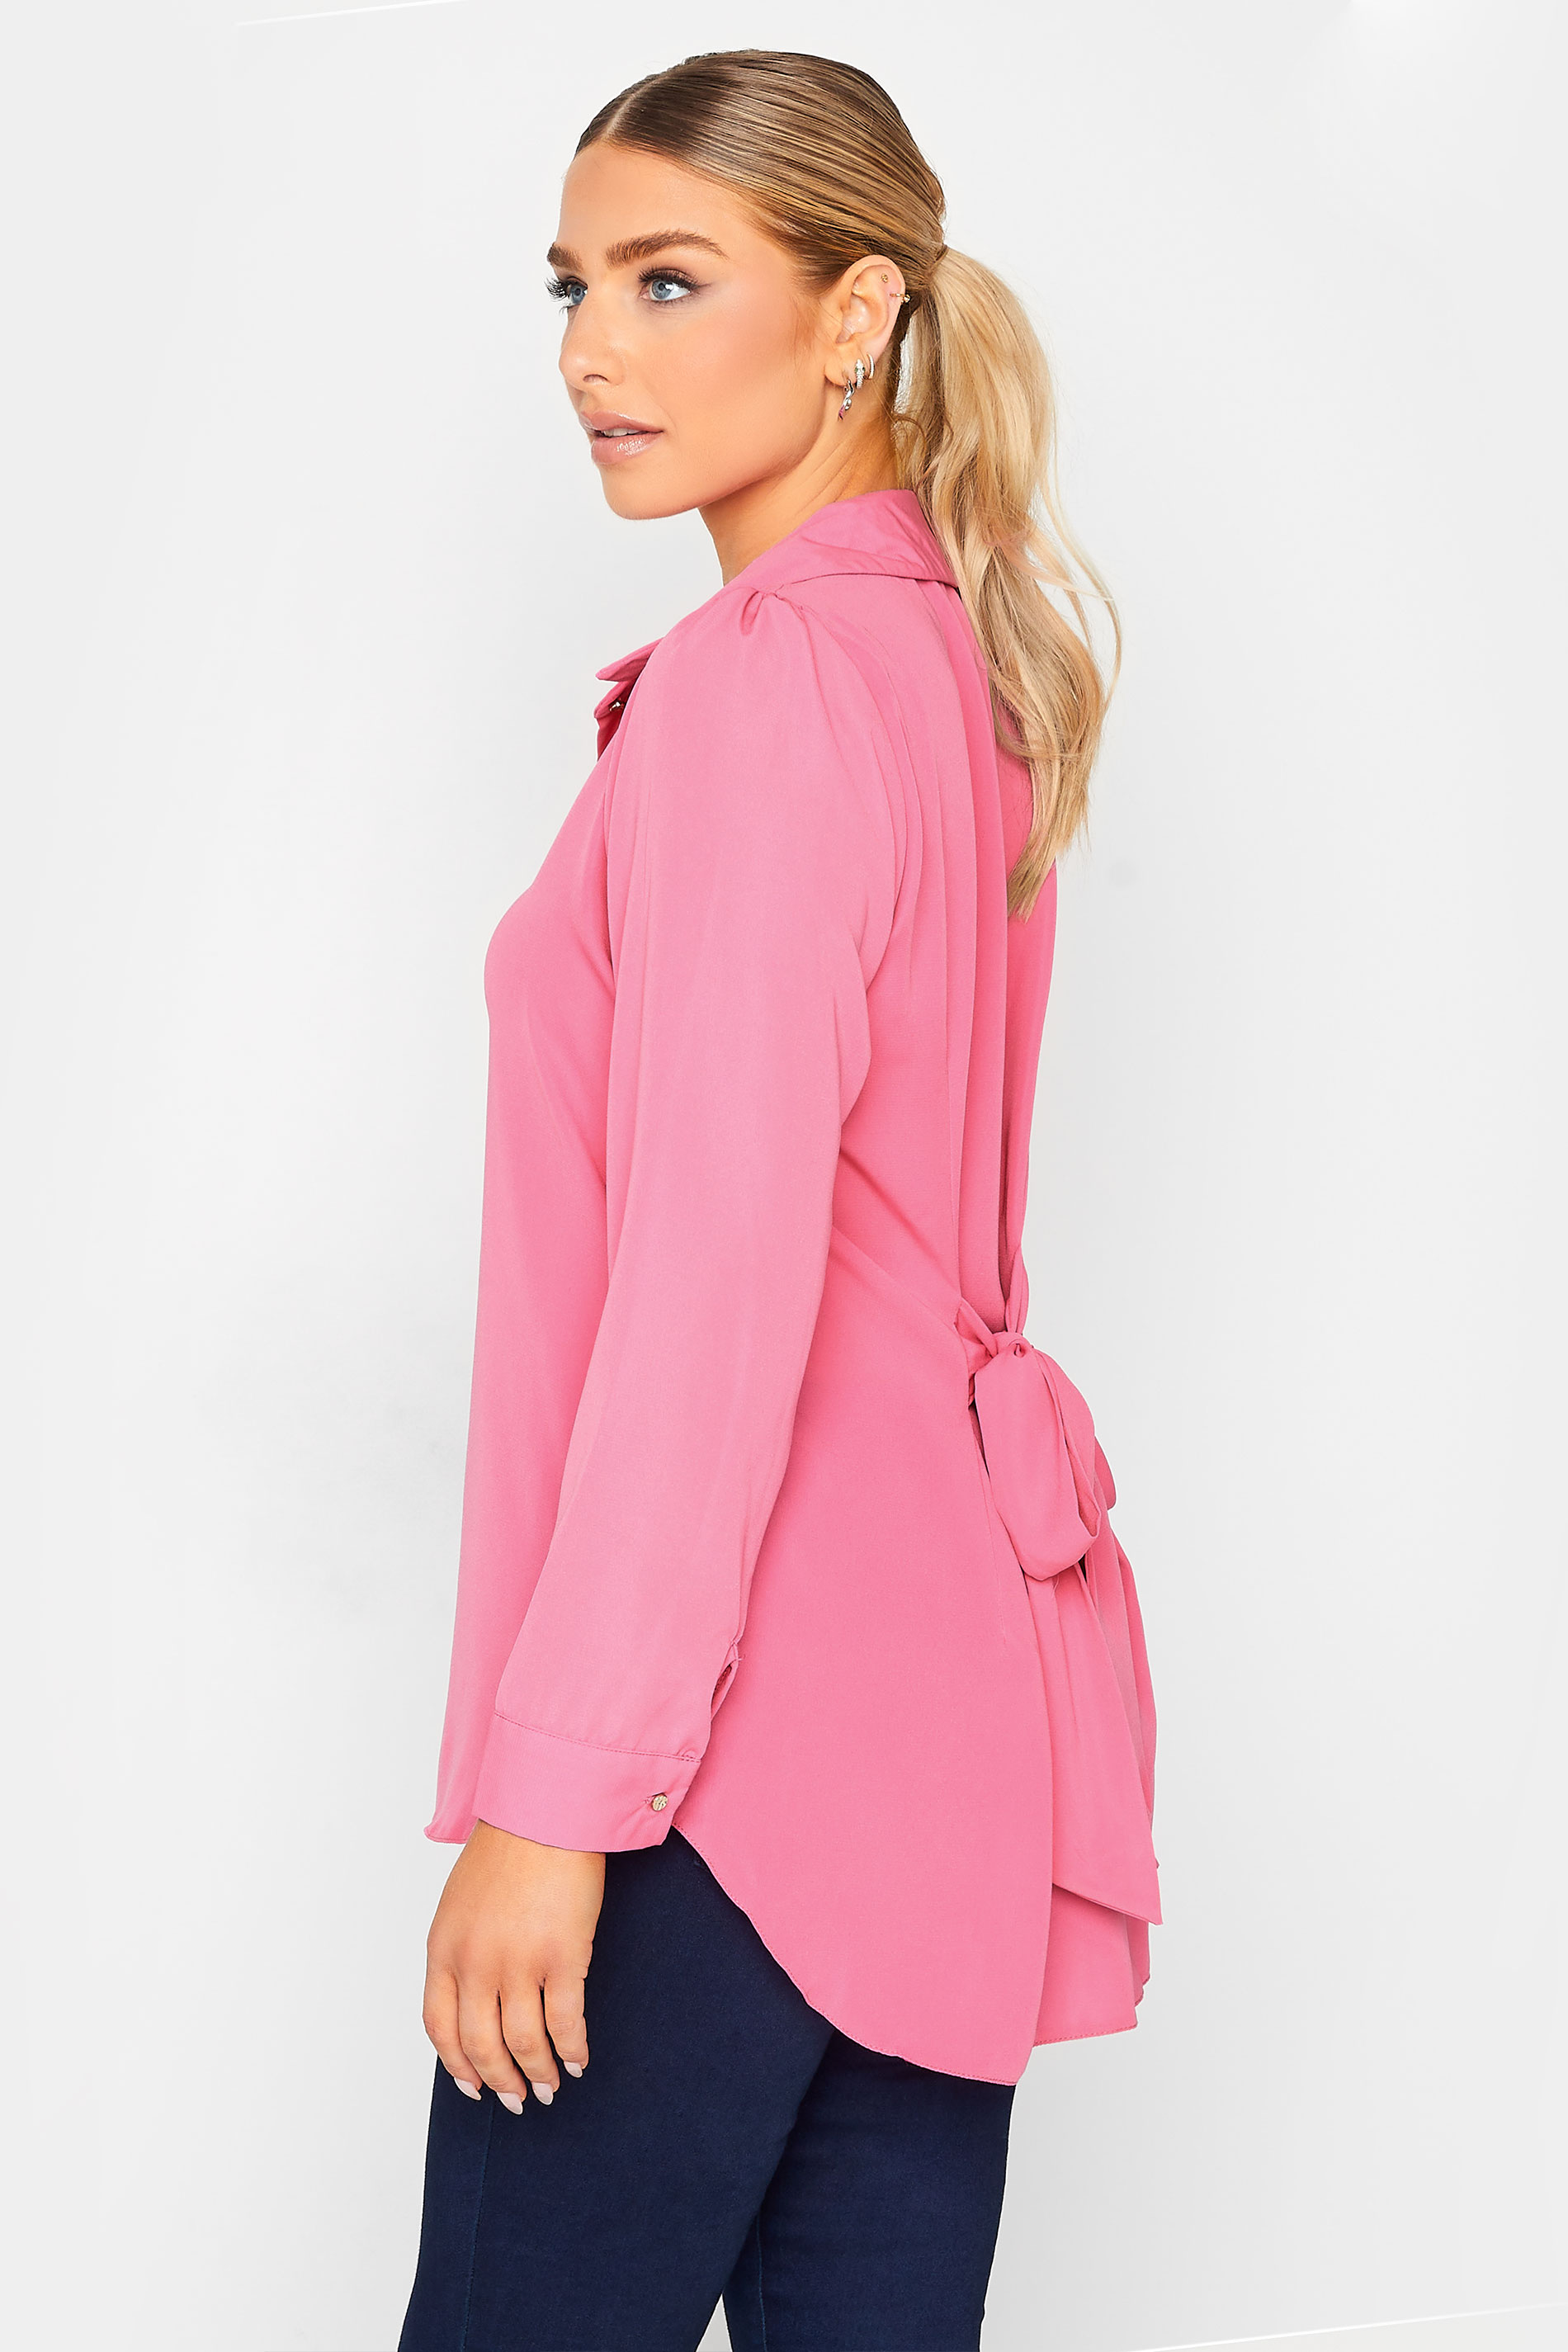 M&Co Hot Pink Tie Waist Tunic Shirt | M&Co 3